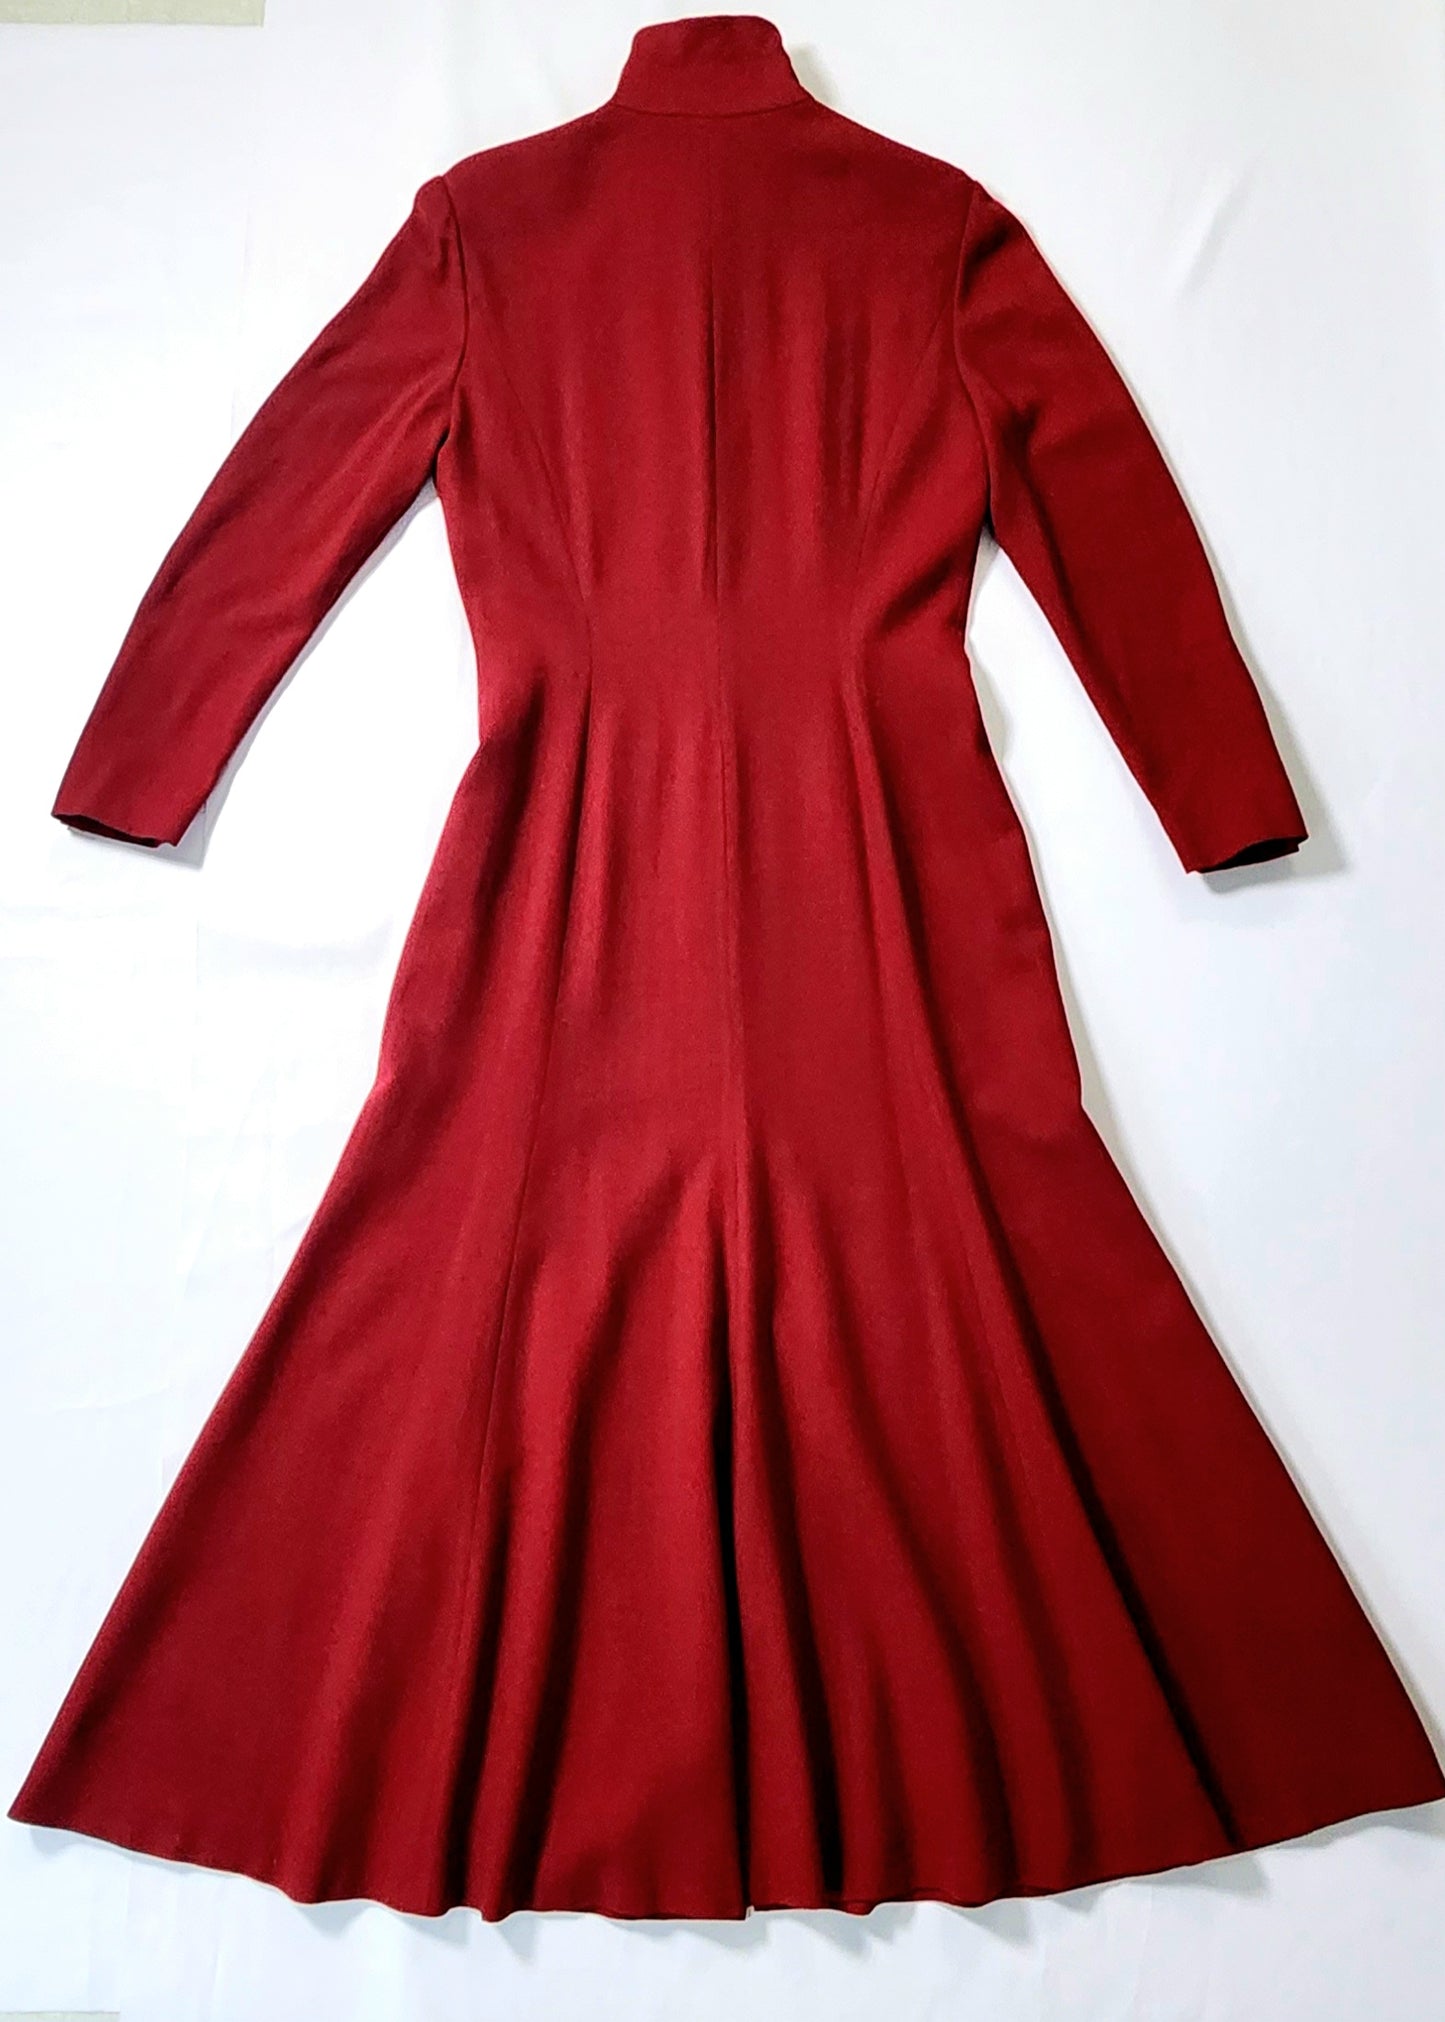 Dresses/Coats